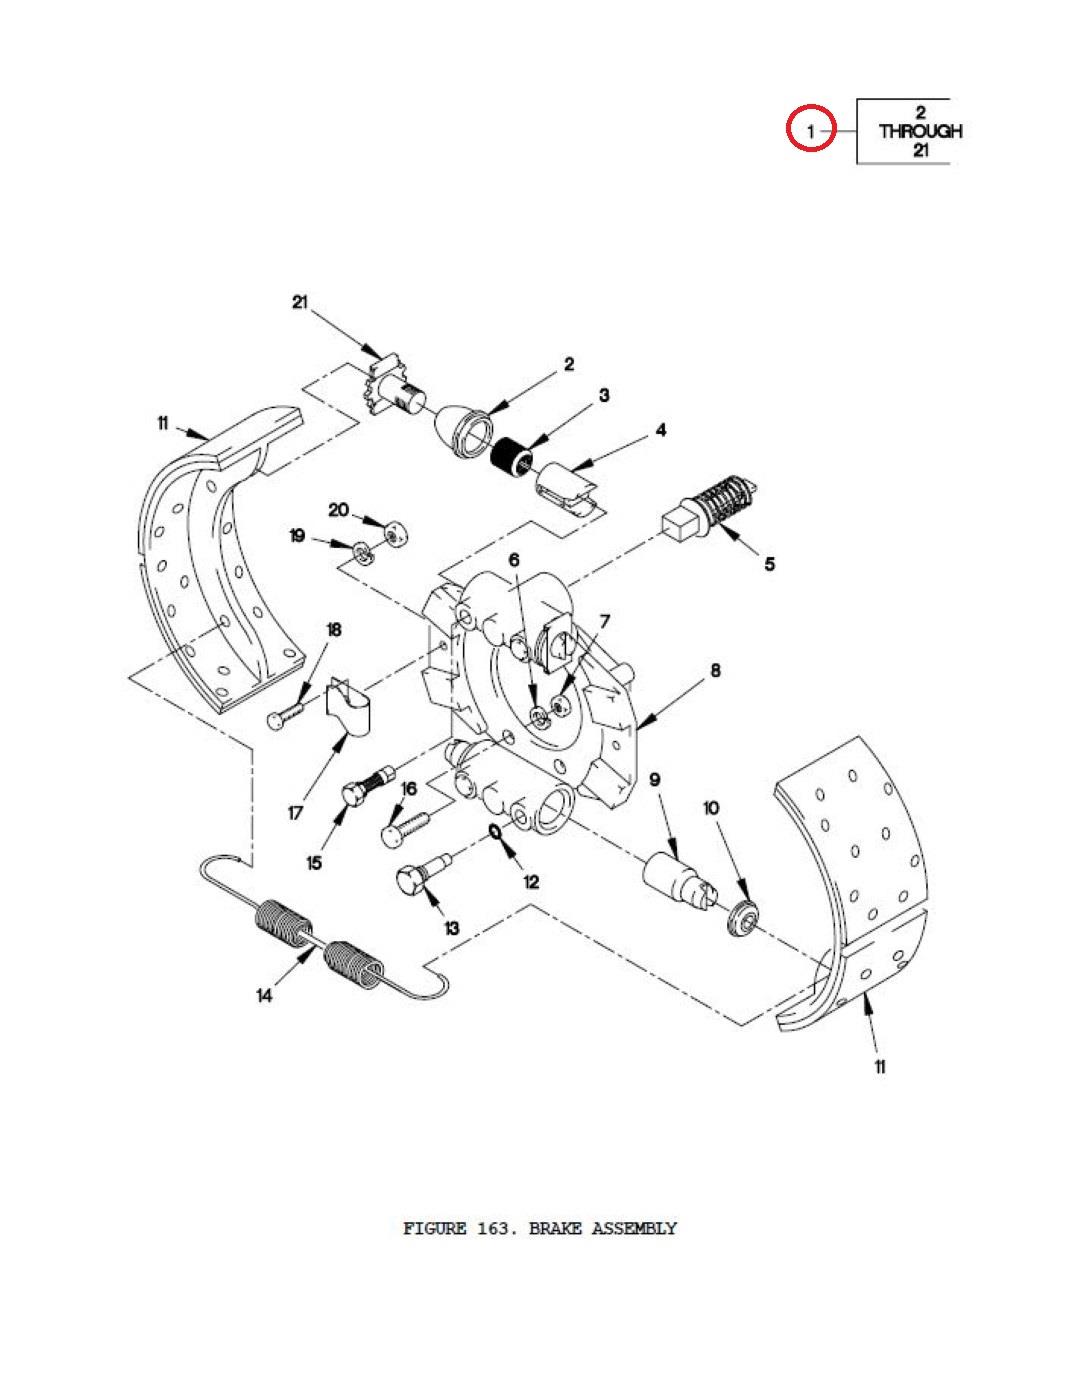 FM-337 | FM-337 FMTV Passenger - Right Side Center Rear Axle Brake Assembly Parts Diagram (2).JPG